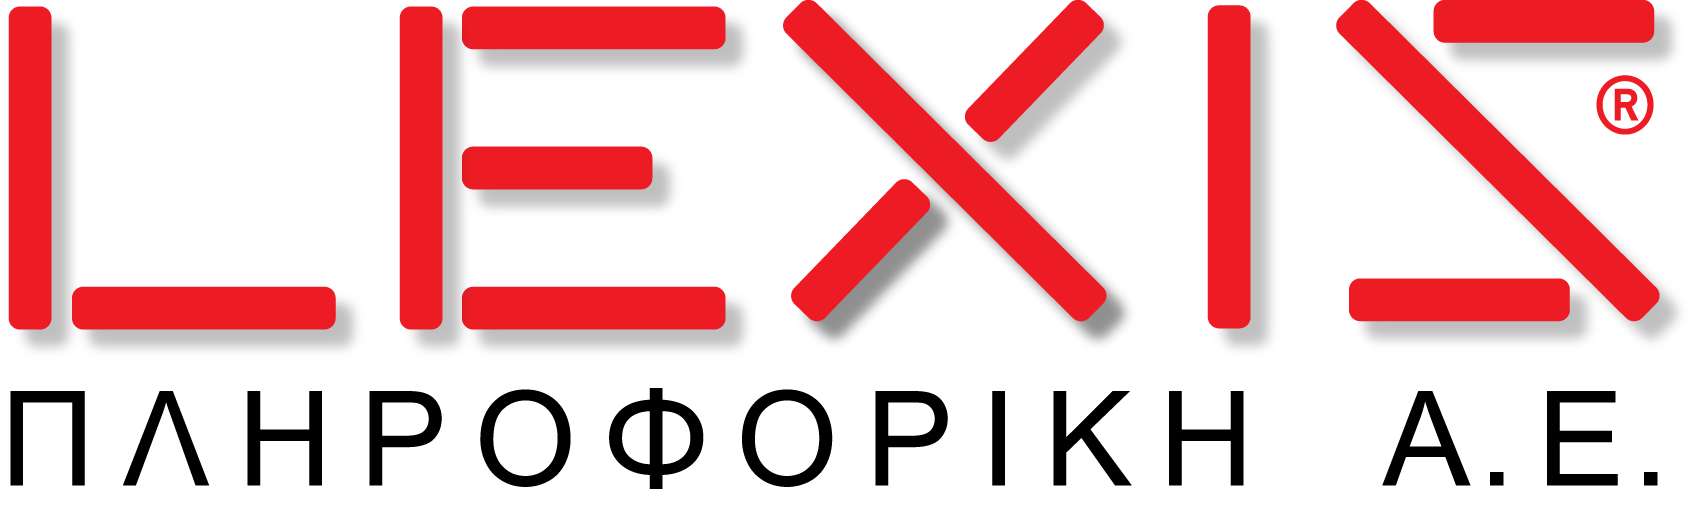 lexis logo